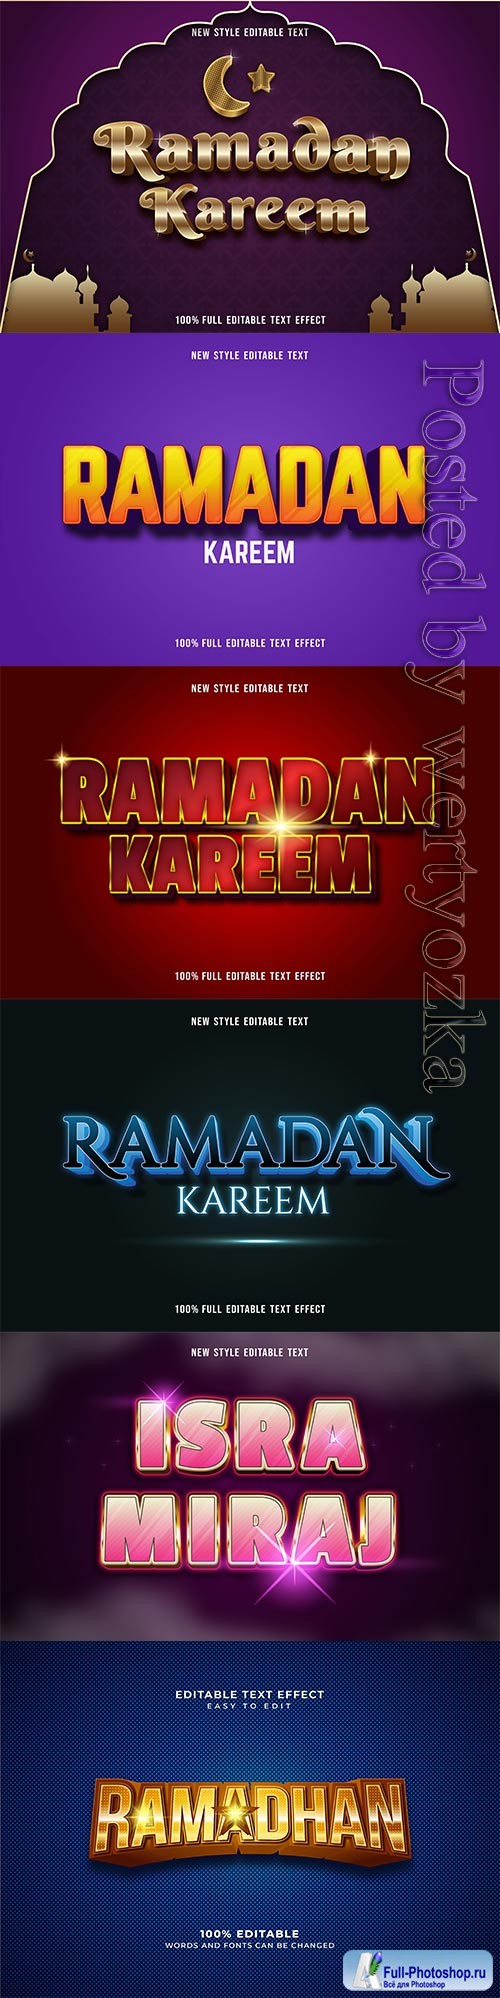 Ramadan kareem, eid mubarak vector text effect vol 7